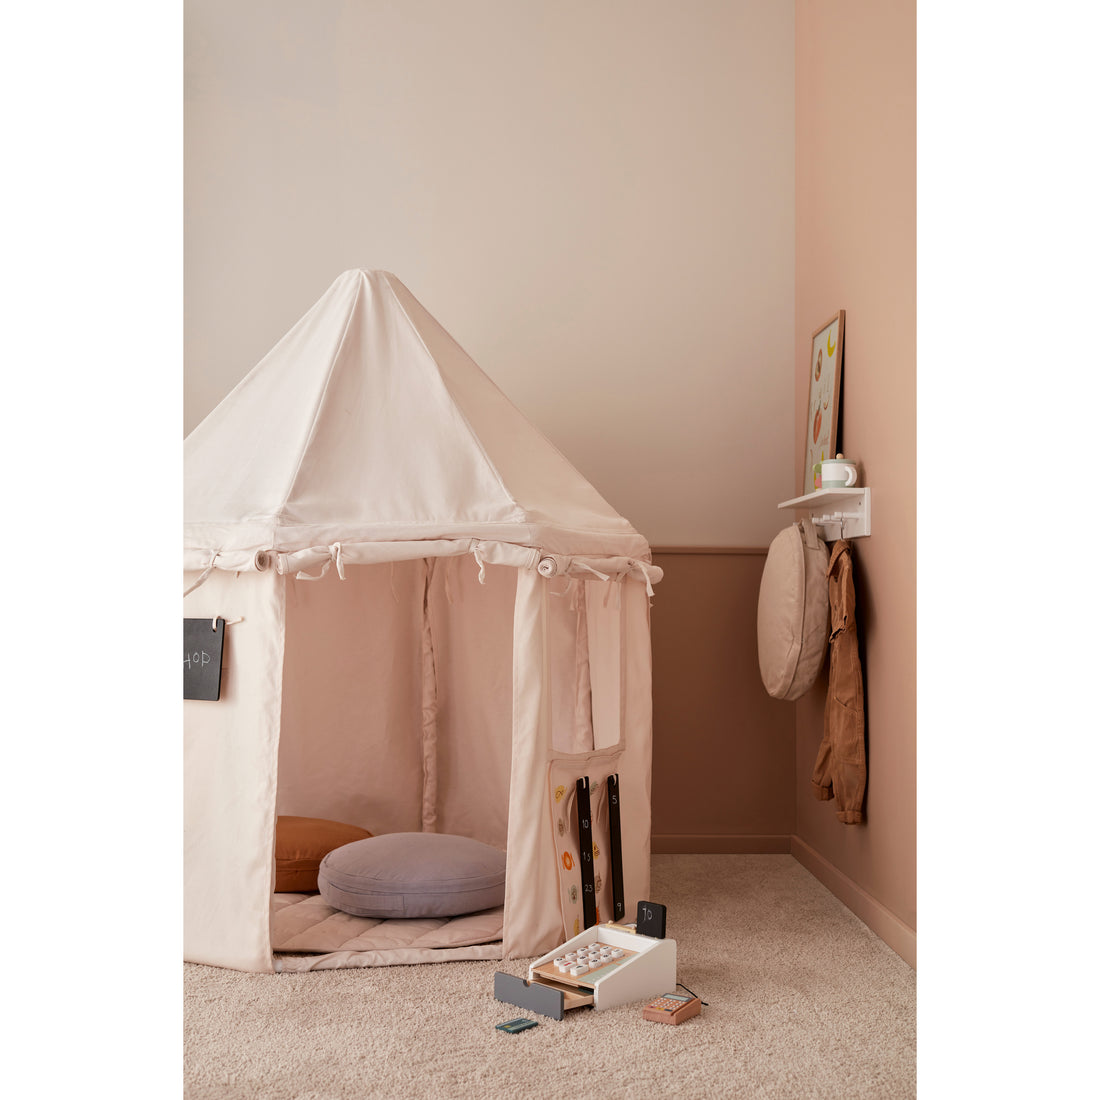 kids-concept-tent-add-on-play-set-kids-hub-kidc-1000643- (8)